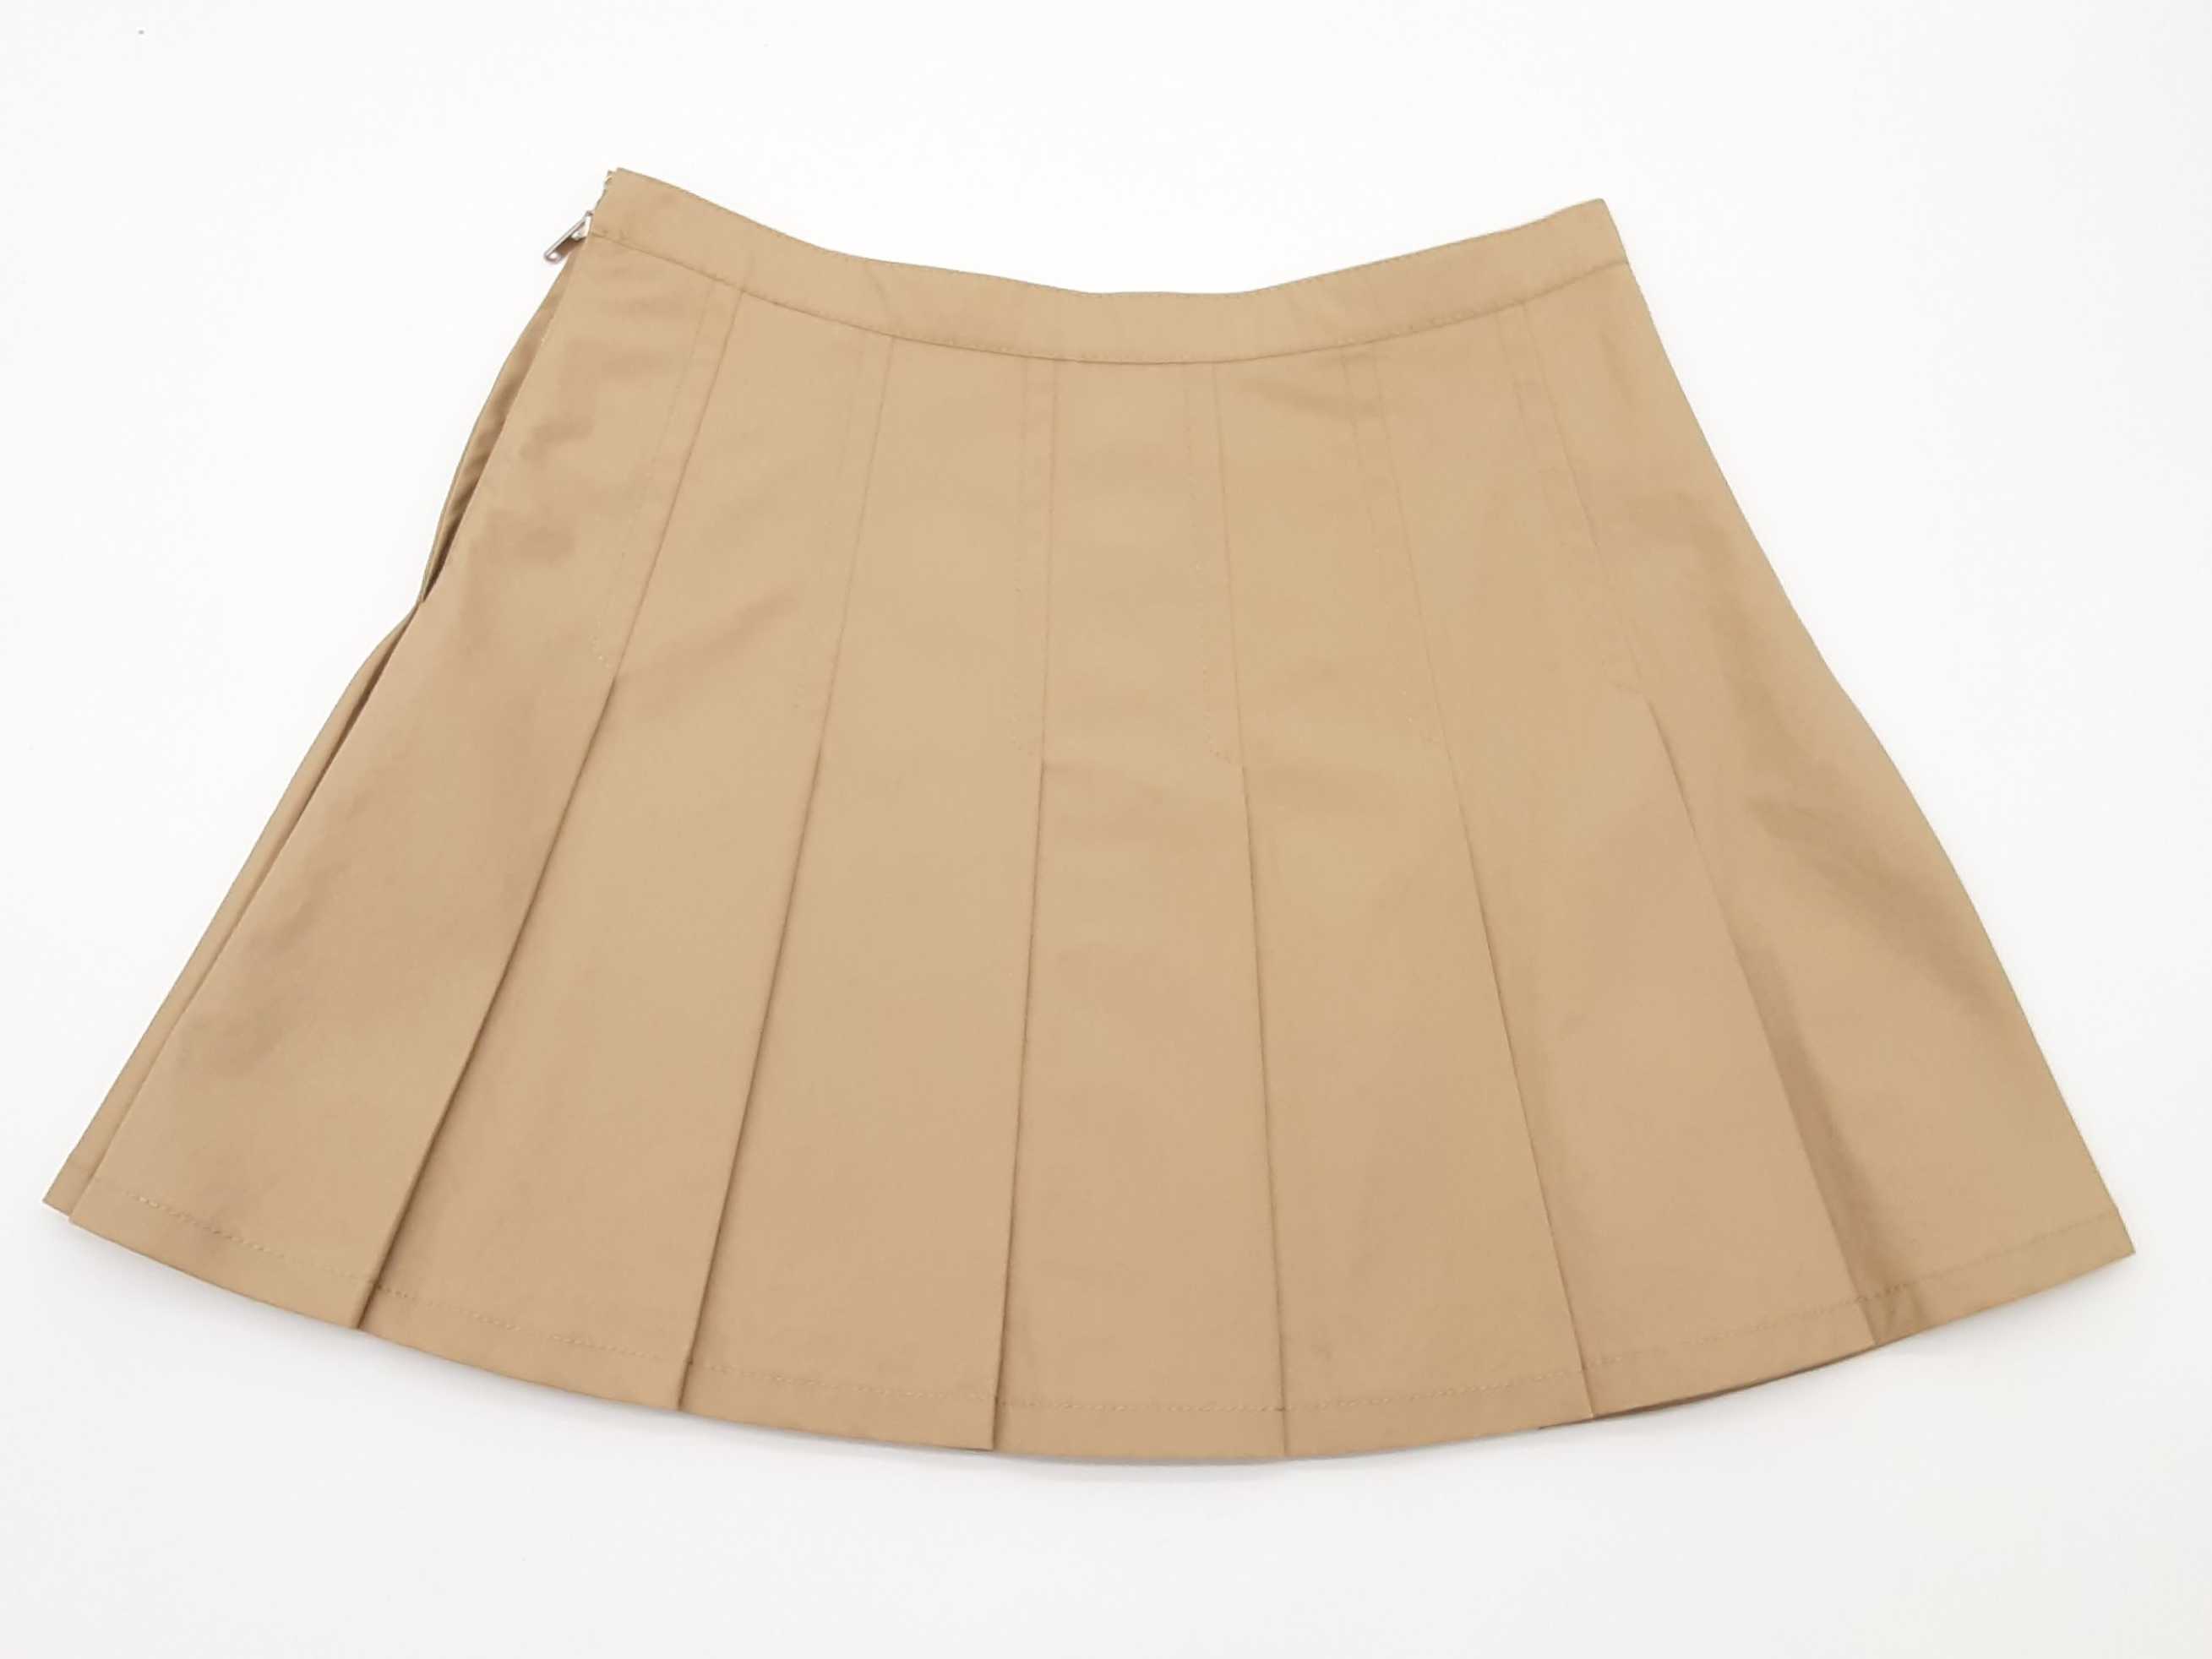 Christian Dior Tan Pleated Skirt Doorxde 144010015235